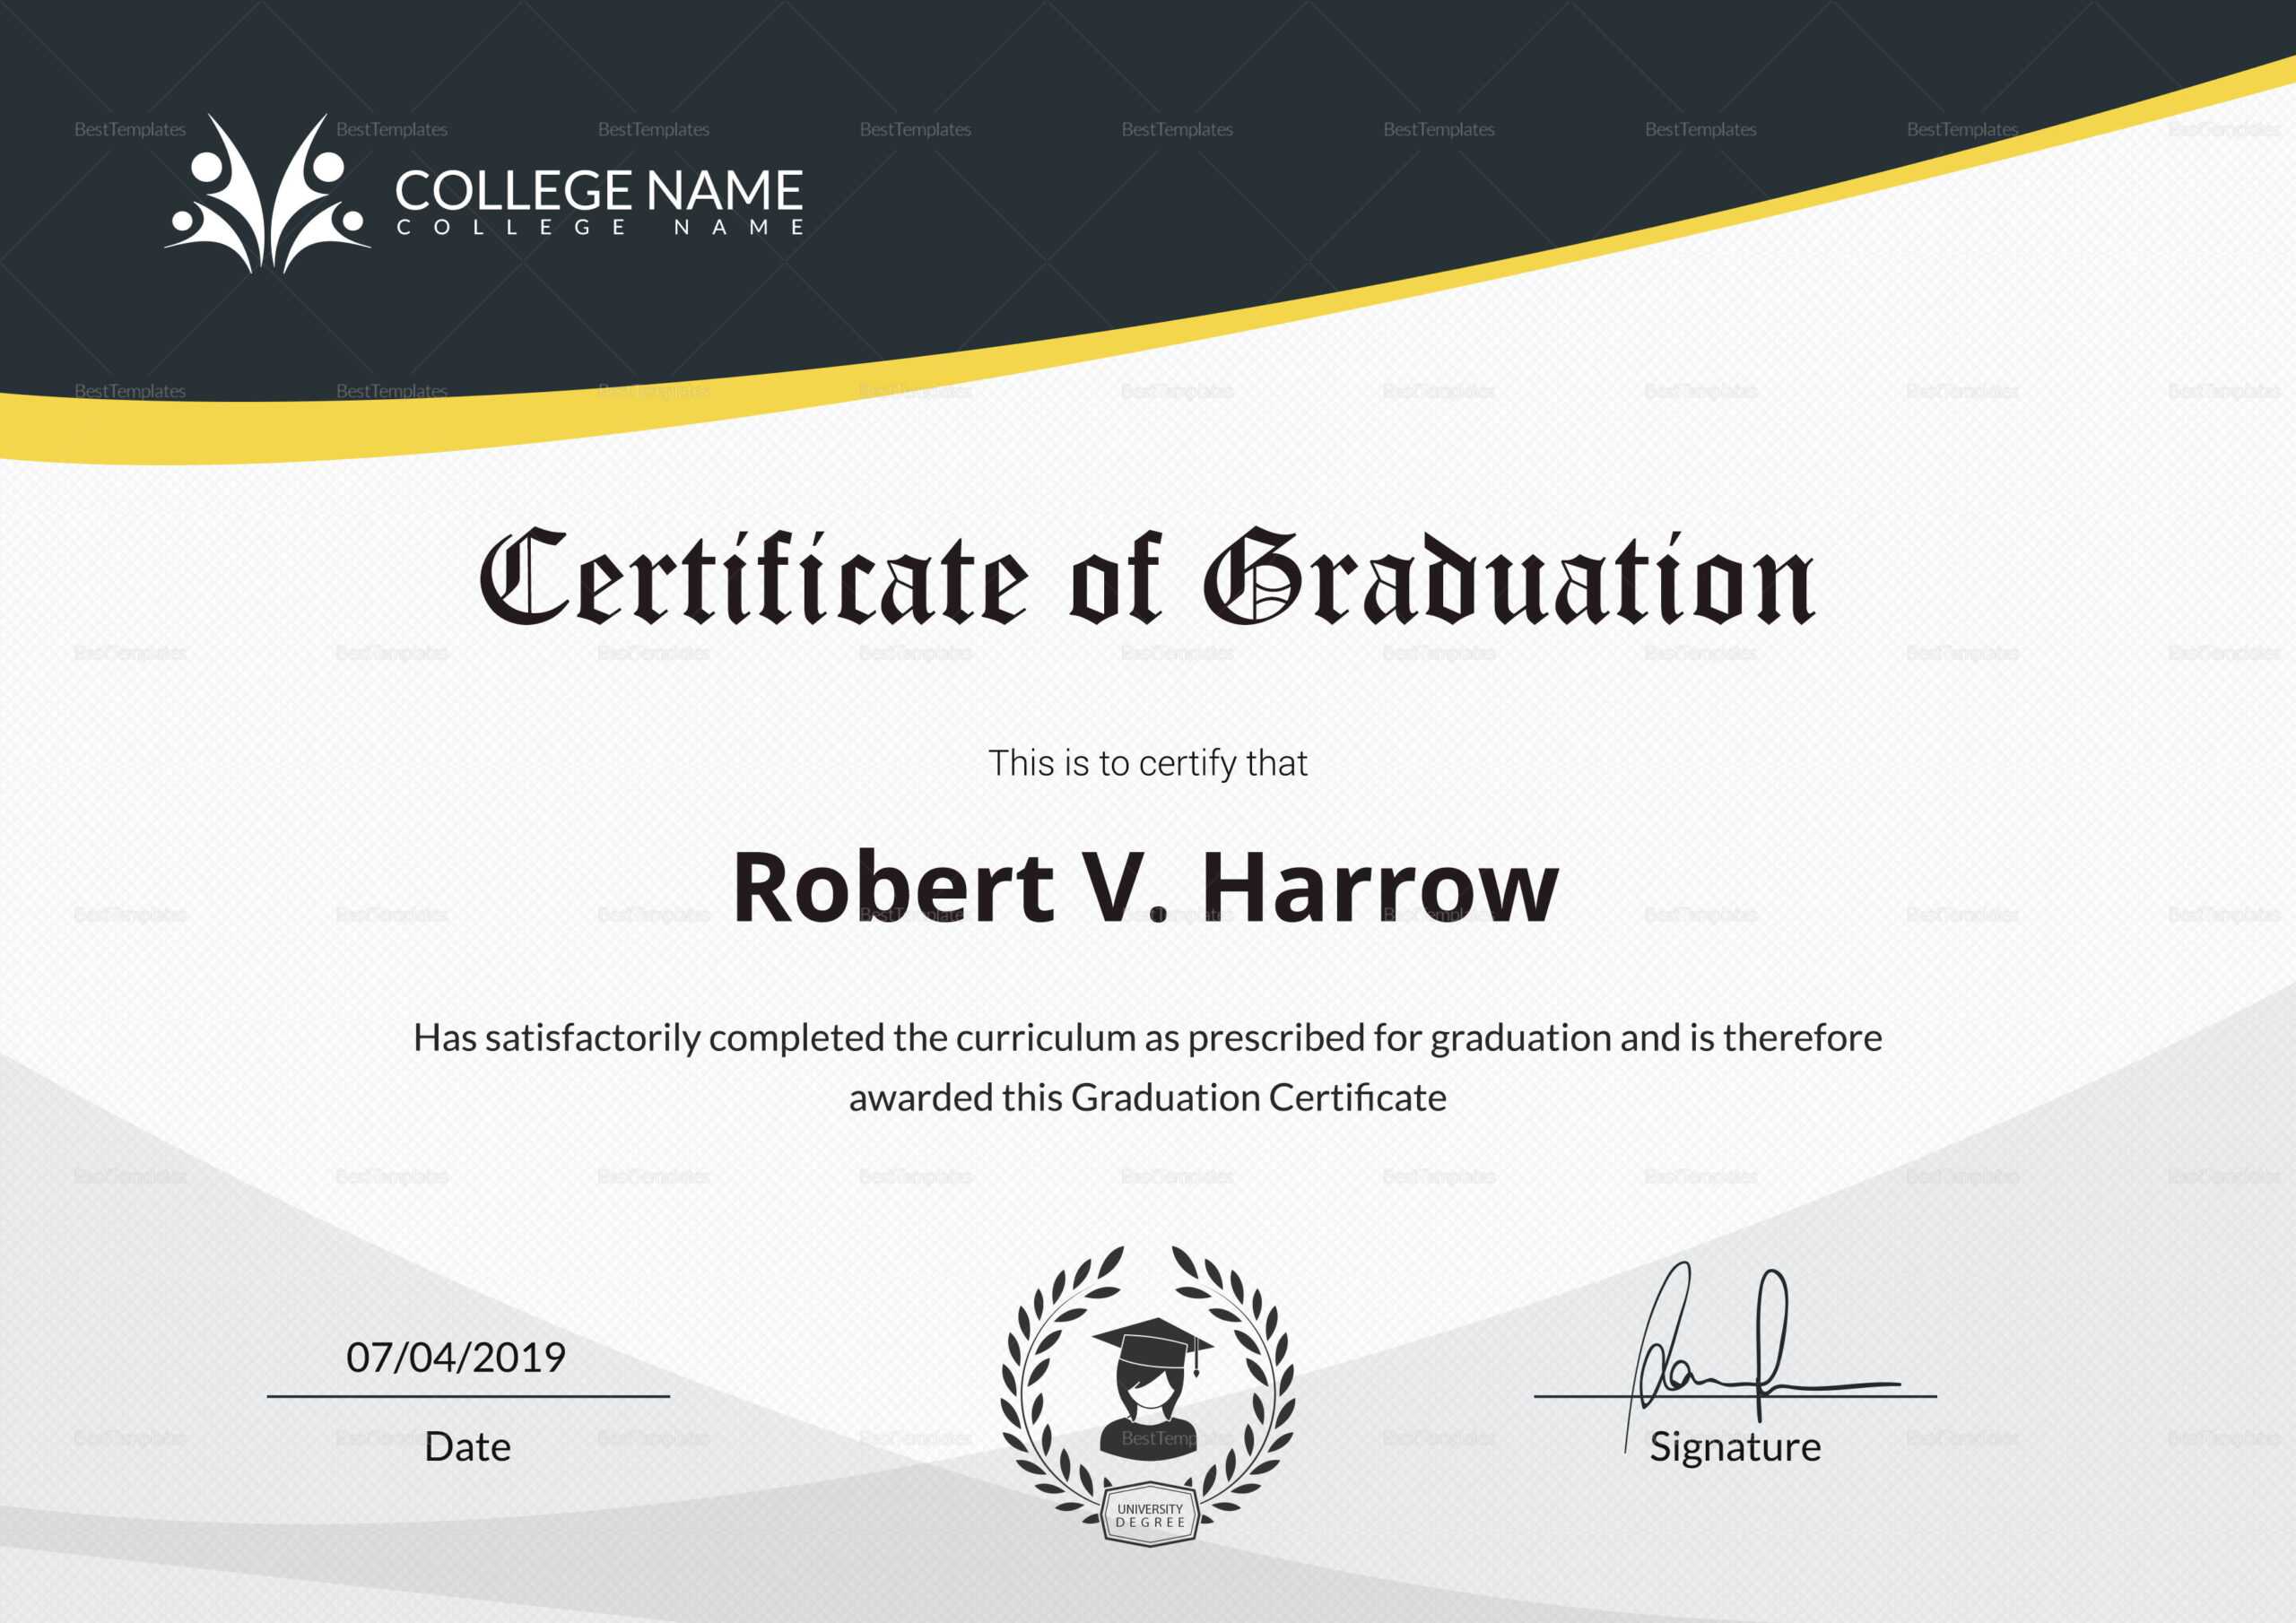 Universal College Graduation Certificate Template In College Graduation Certificate Template